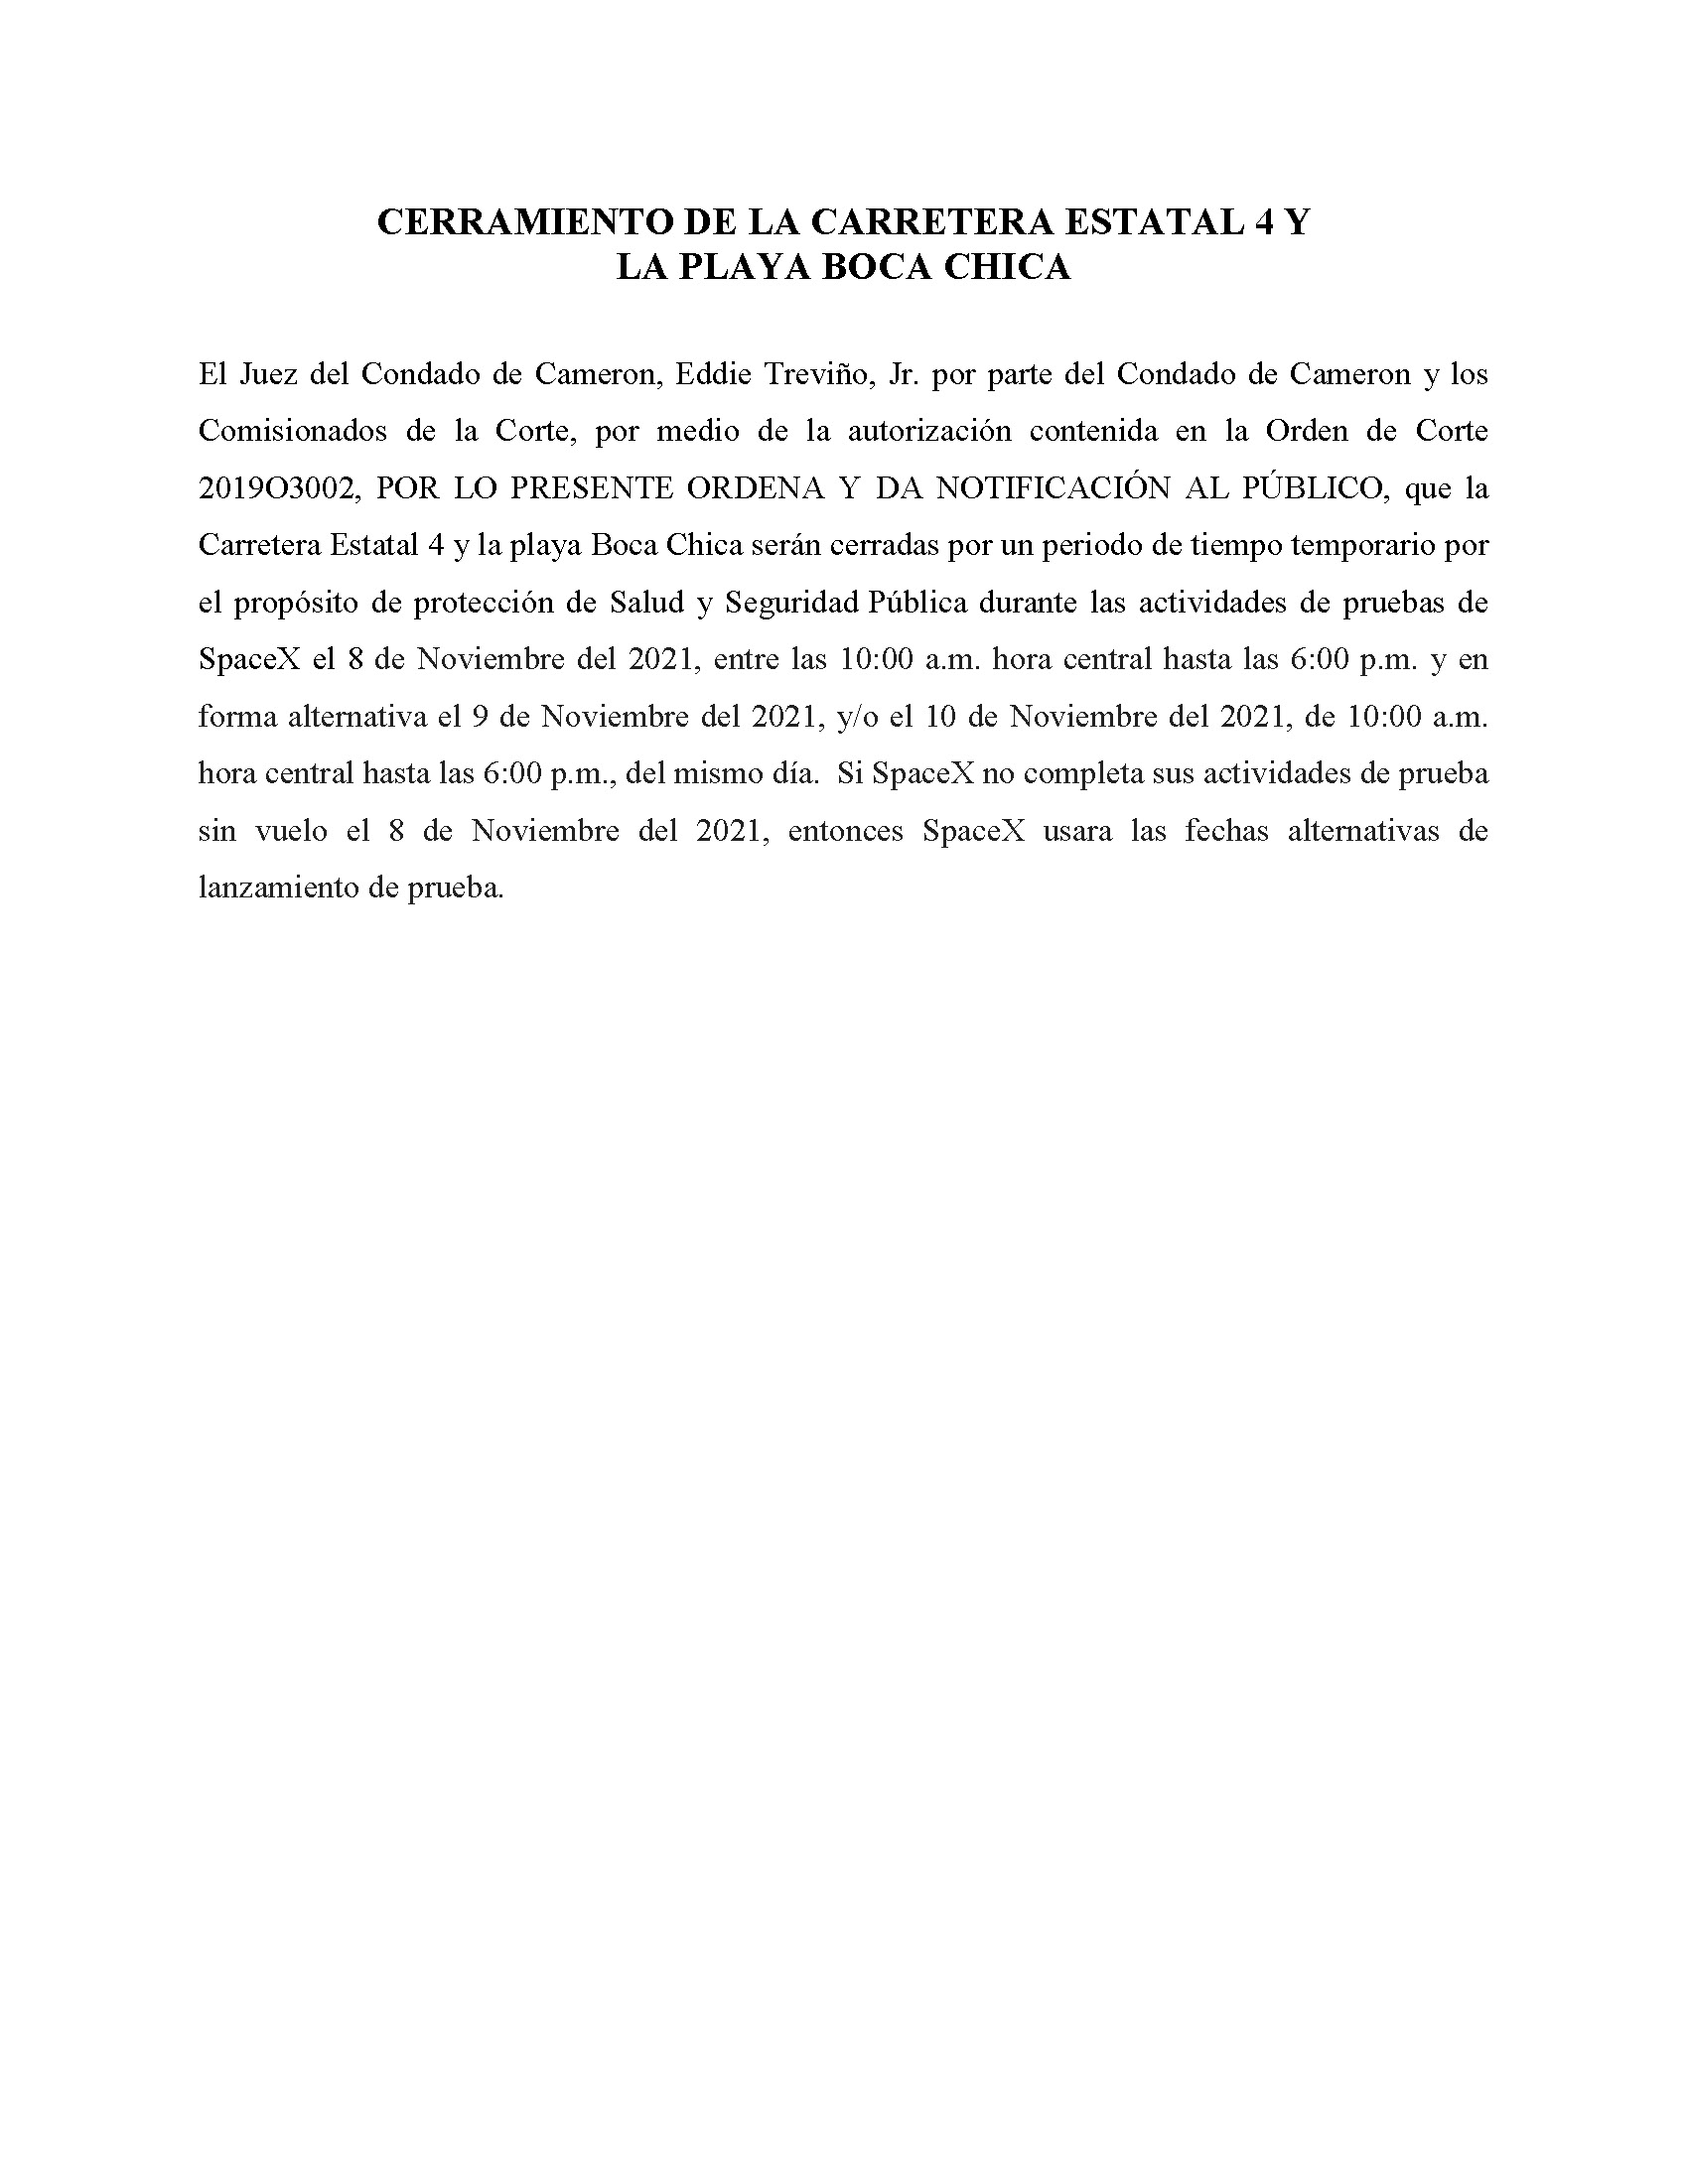 ORDER.CLOSURE OF HIGHWAY 4 Y LA PLAYA BOCA CHICA.SPANISH.11.08.2021